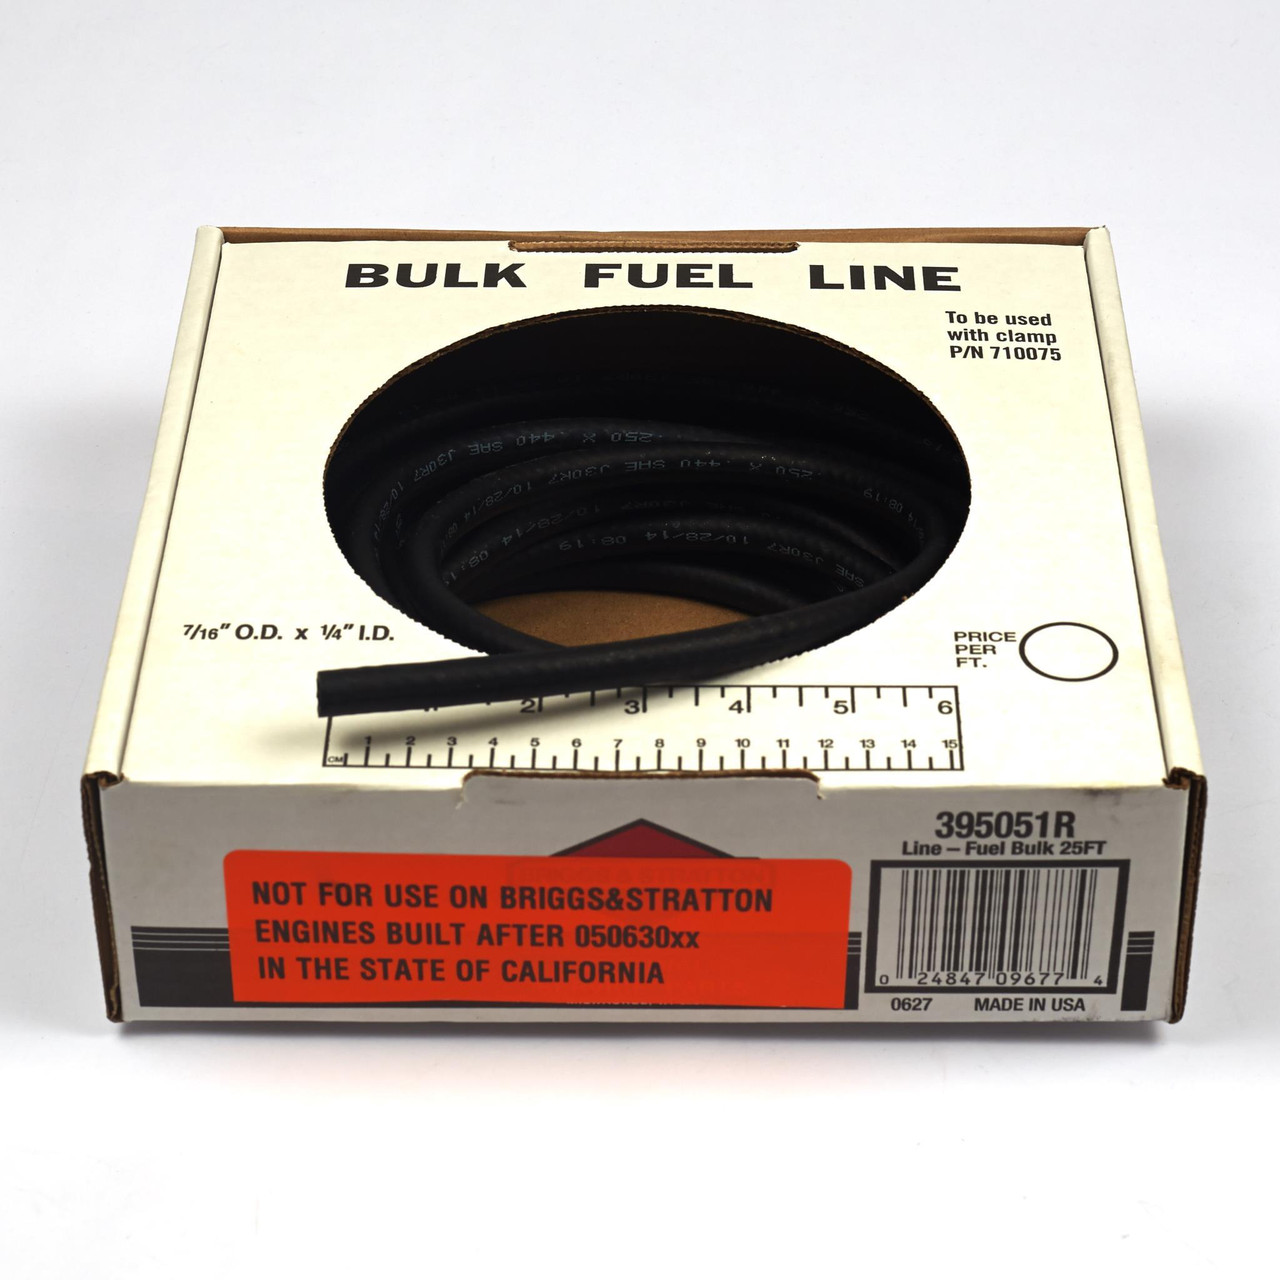 Briggs & Stratton Line-Fuel Bulk 25 Ft 395051R